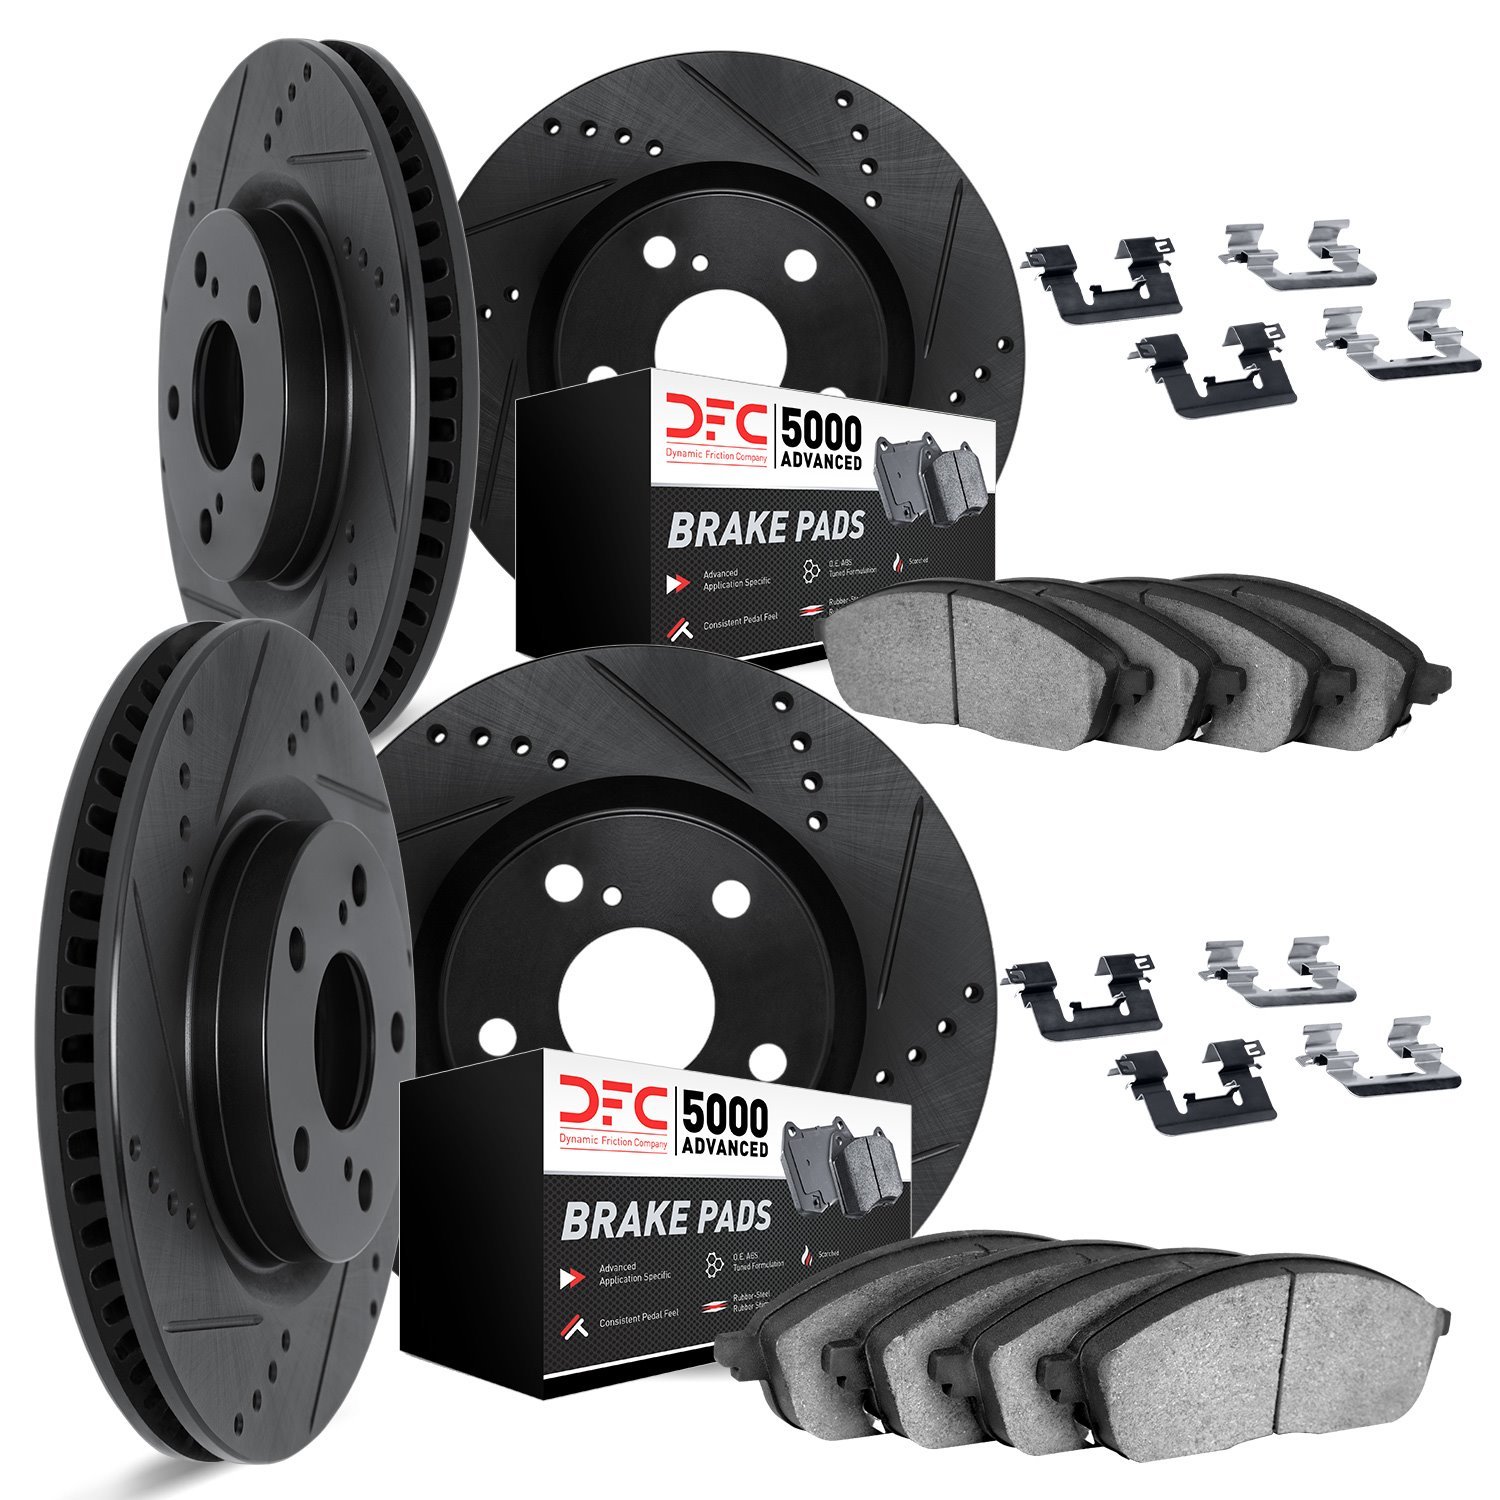 8514-20016 Drilled/Slotted Brake Rotors w/5000 Advanced Brake Pads Kit & Hardware [Black], 2017-2019 Multiple Makes/Models, Posi